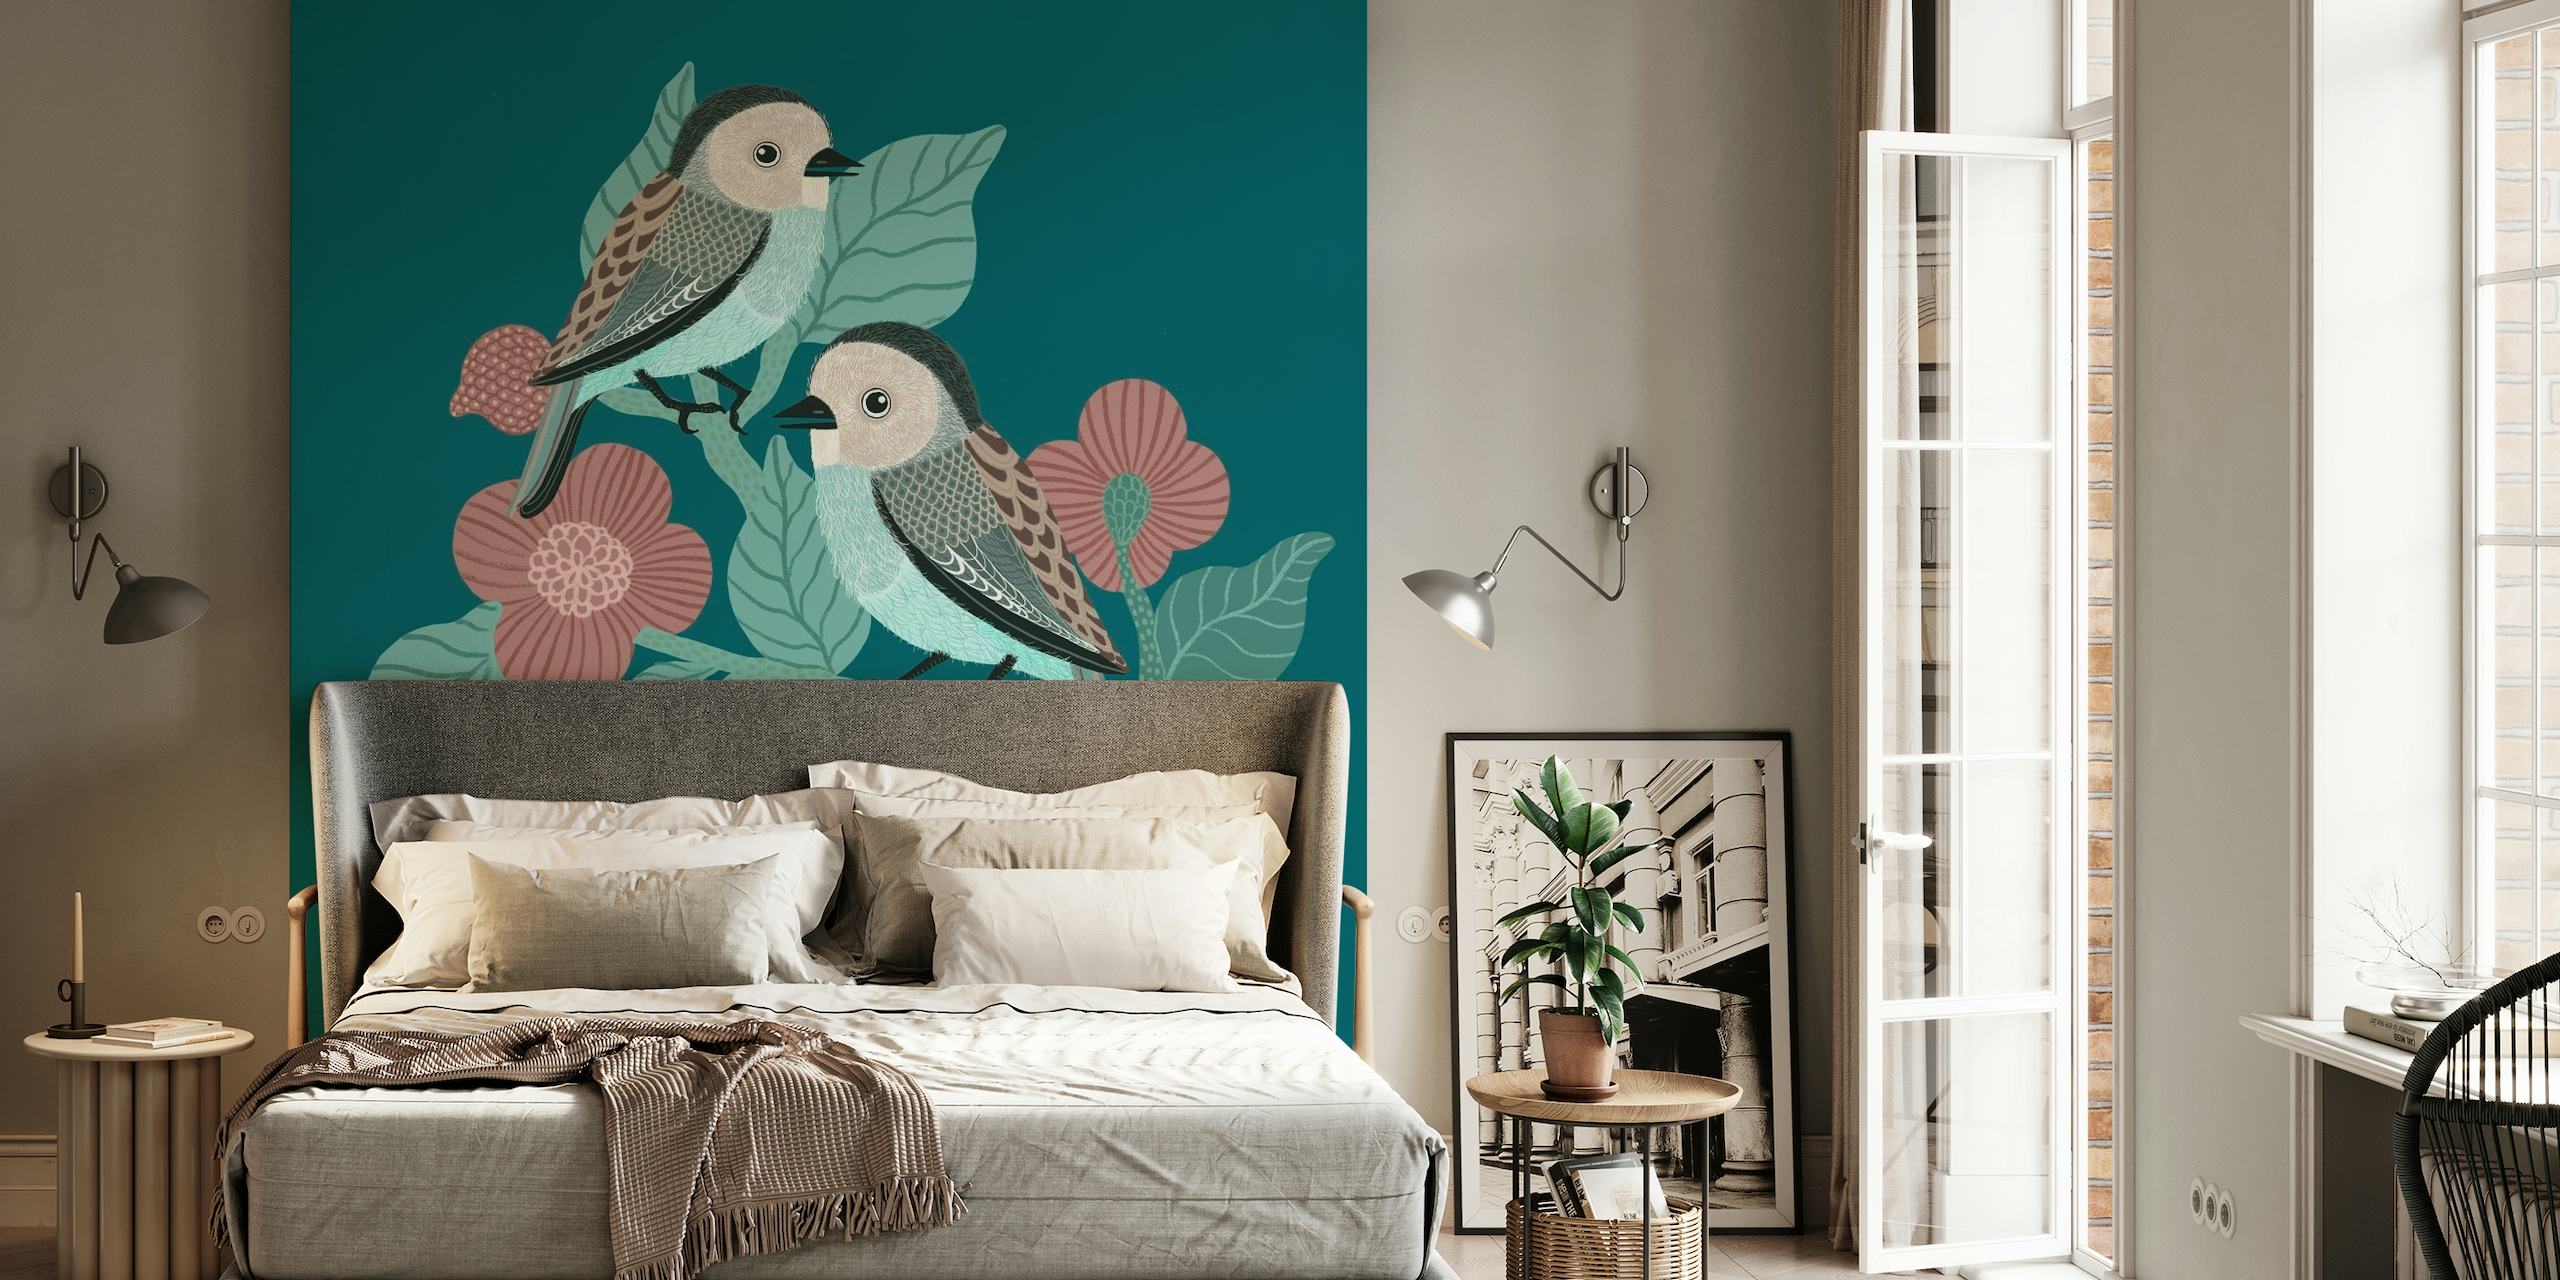 The Birds of Hope wallpaper